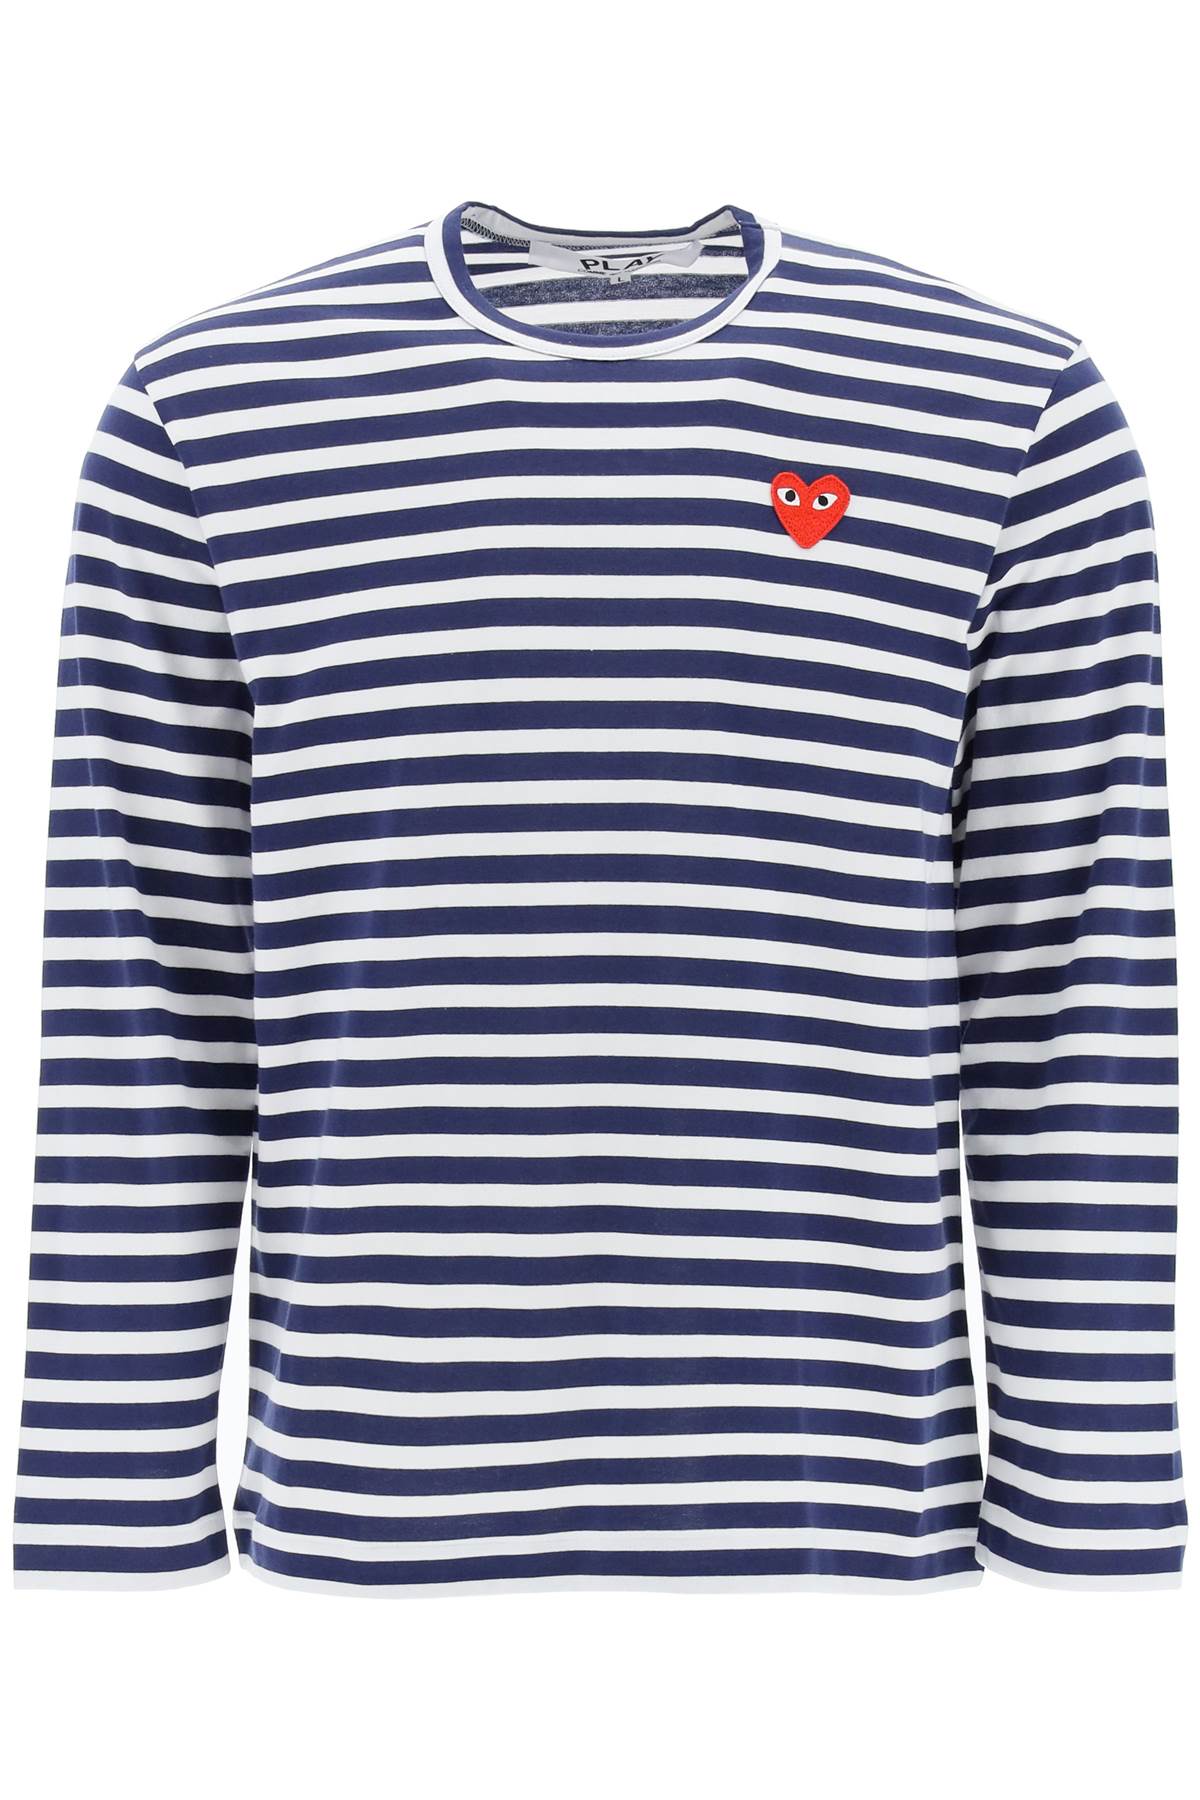 Comme des Garçons Play Striped Long-sleeved T-shirt